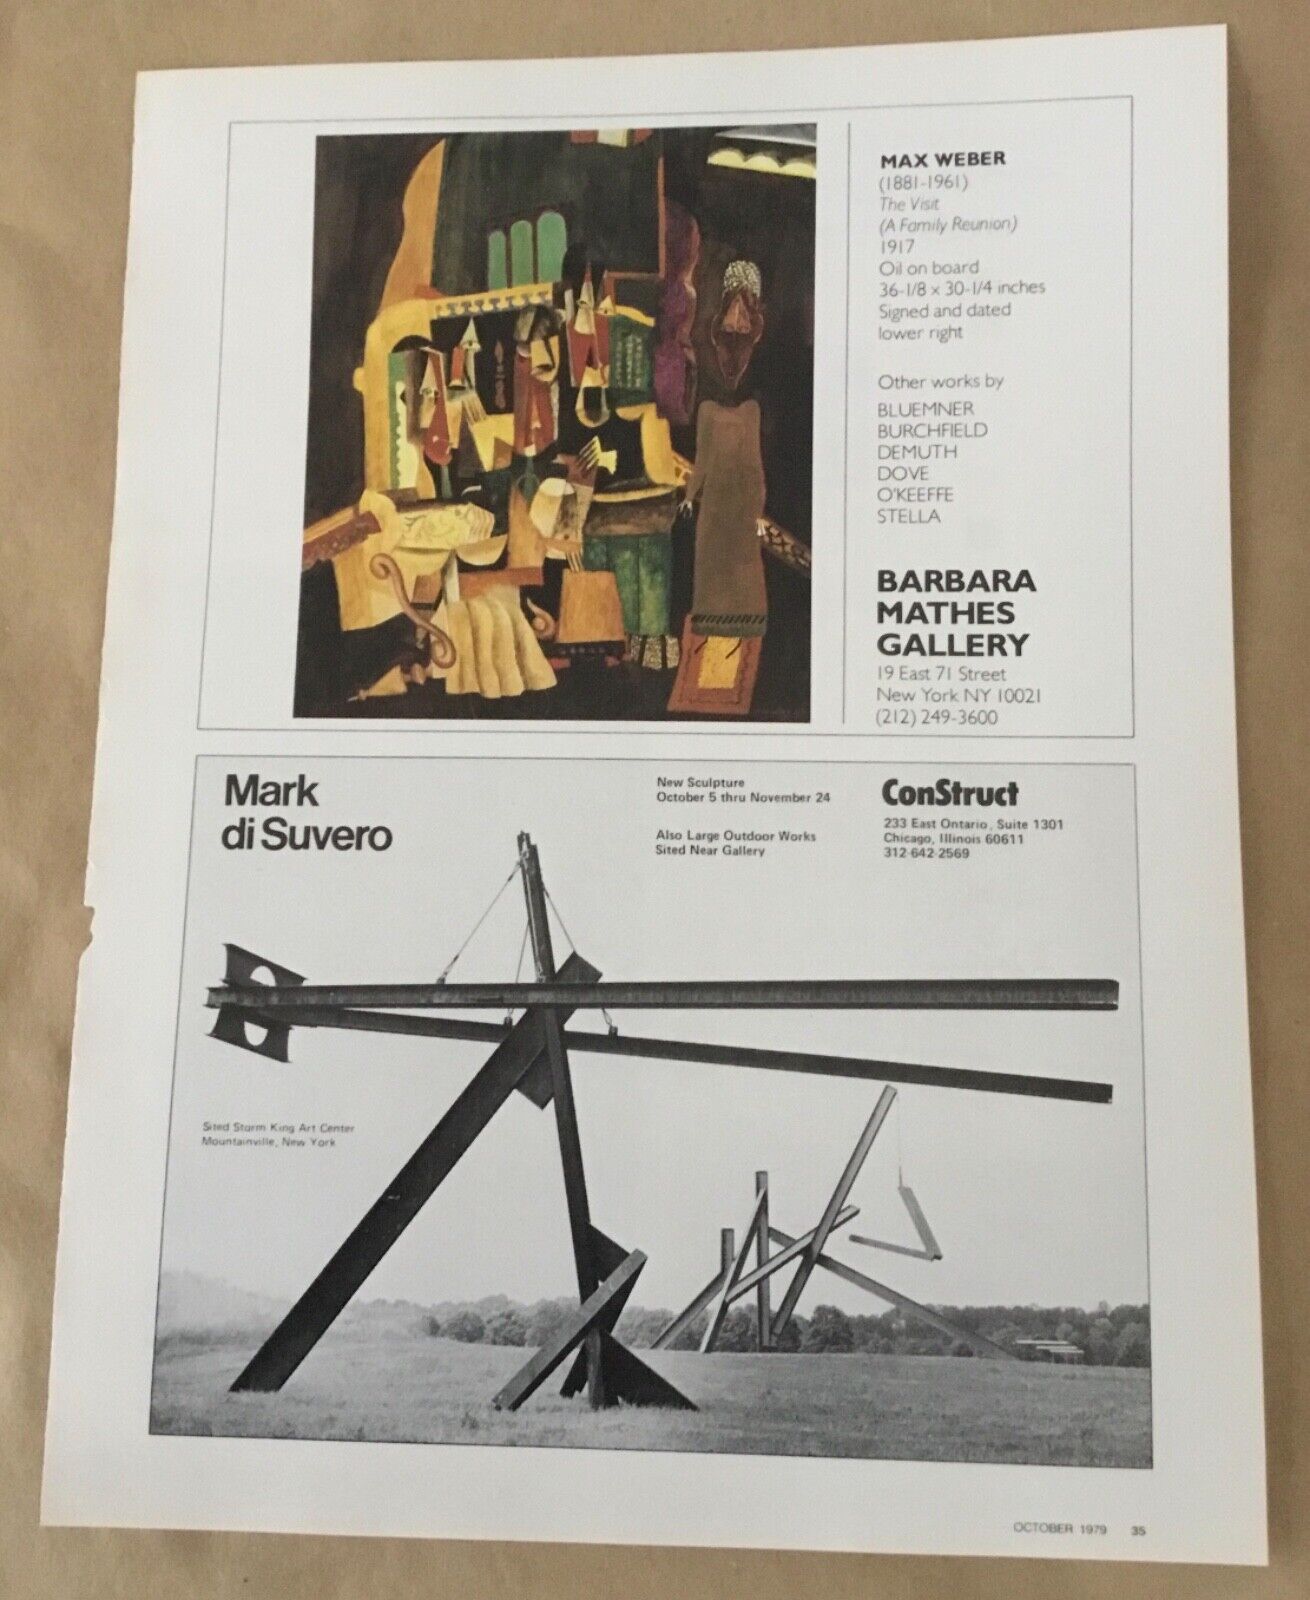 Max Weber & Mark di Suvero gallery exhibition print ad 1979 vintage magazne art